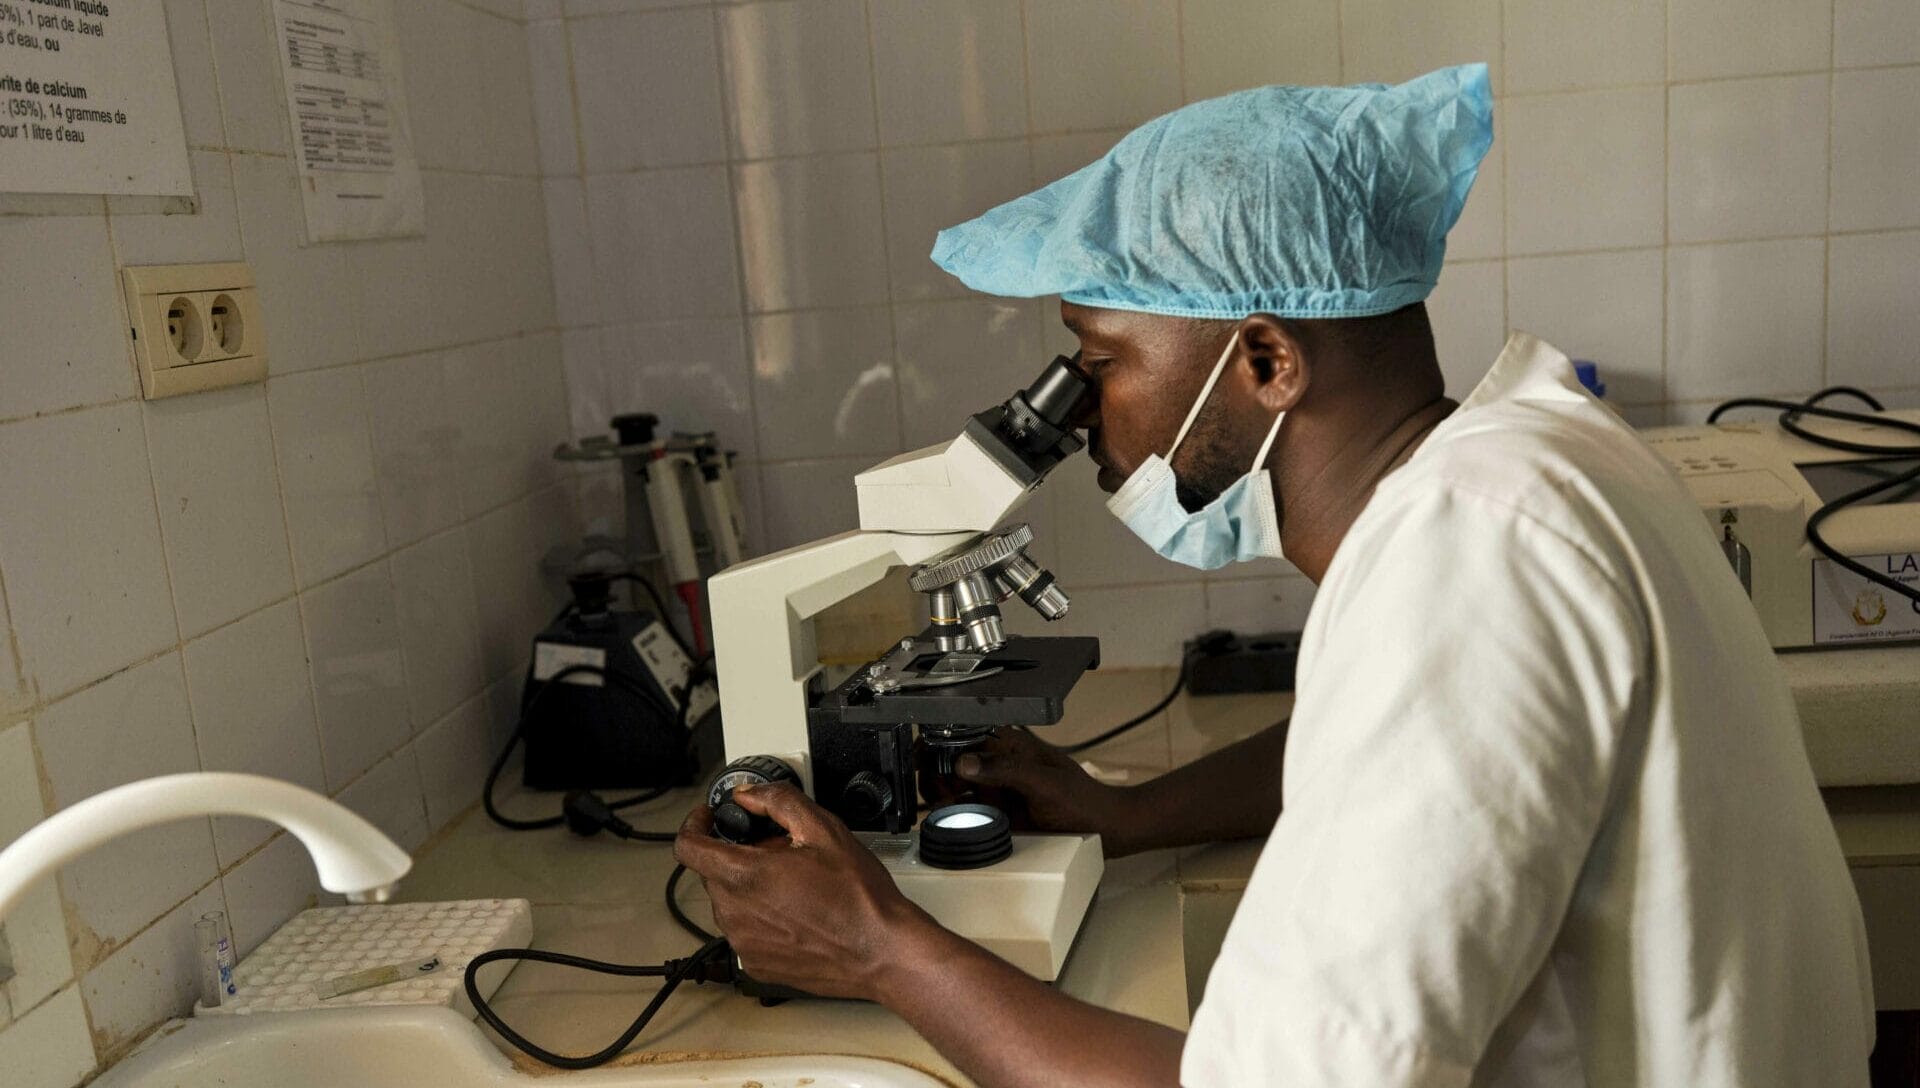 To contribute to better control of malaria transmission in Djibouti